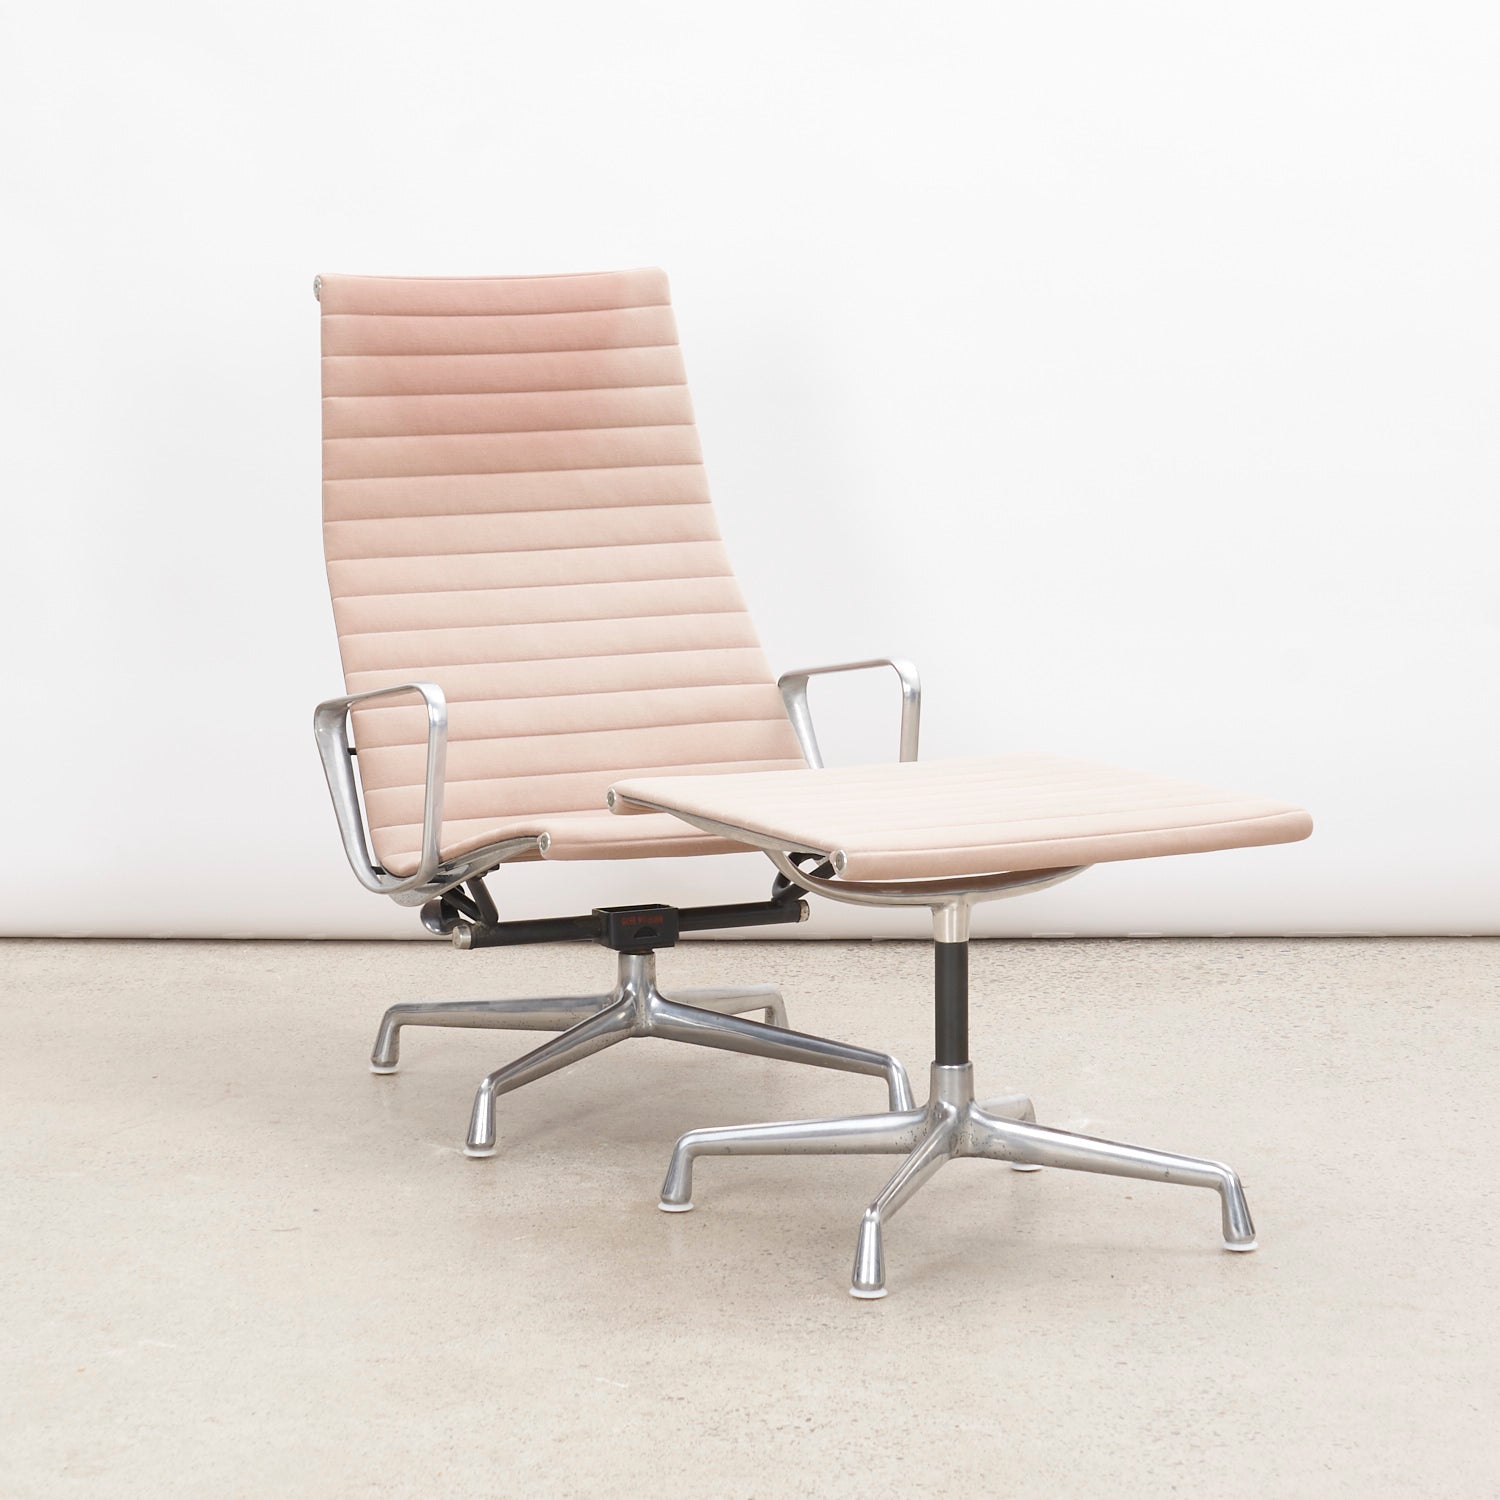 '70s era Eames Aluminum Group Lounge Chair w/ Tilt & Ottoman for Herman Miller